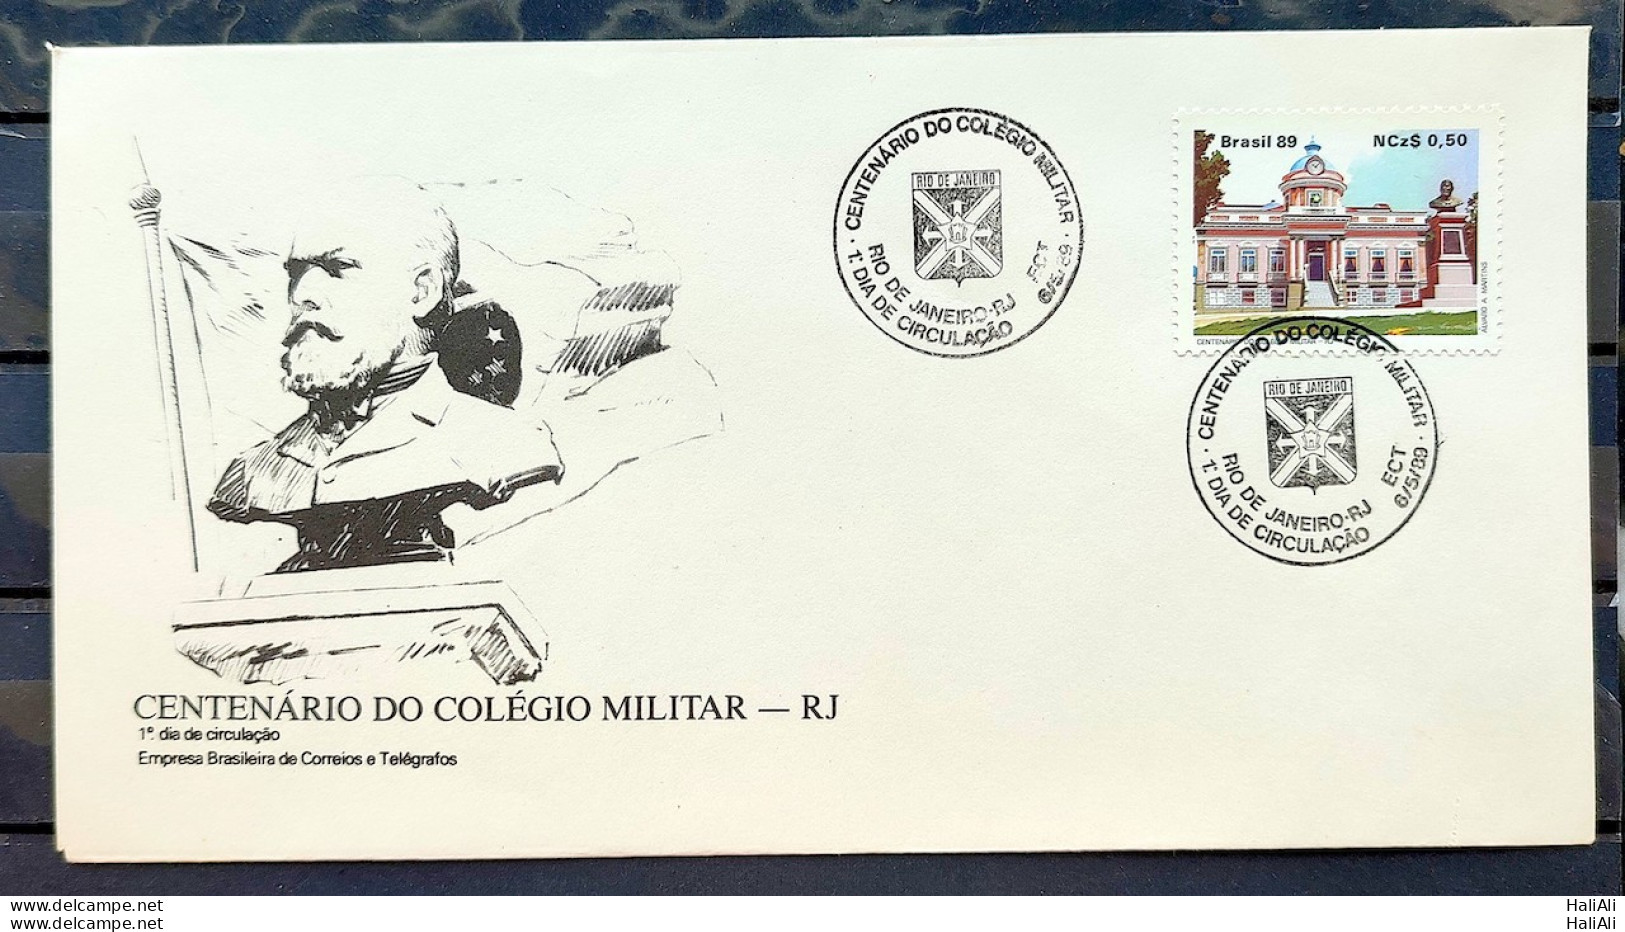 Brazil Envelope FDC 468 1989 MILITARY COLLEGE EDUCATION CBC RJ 02 - Gebruikt